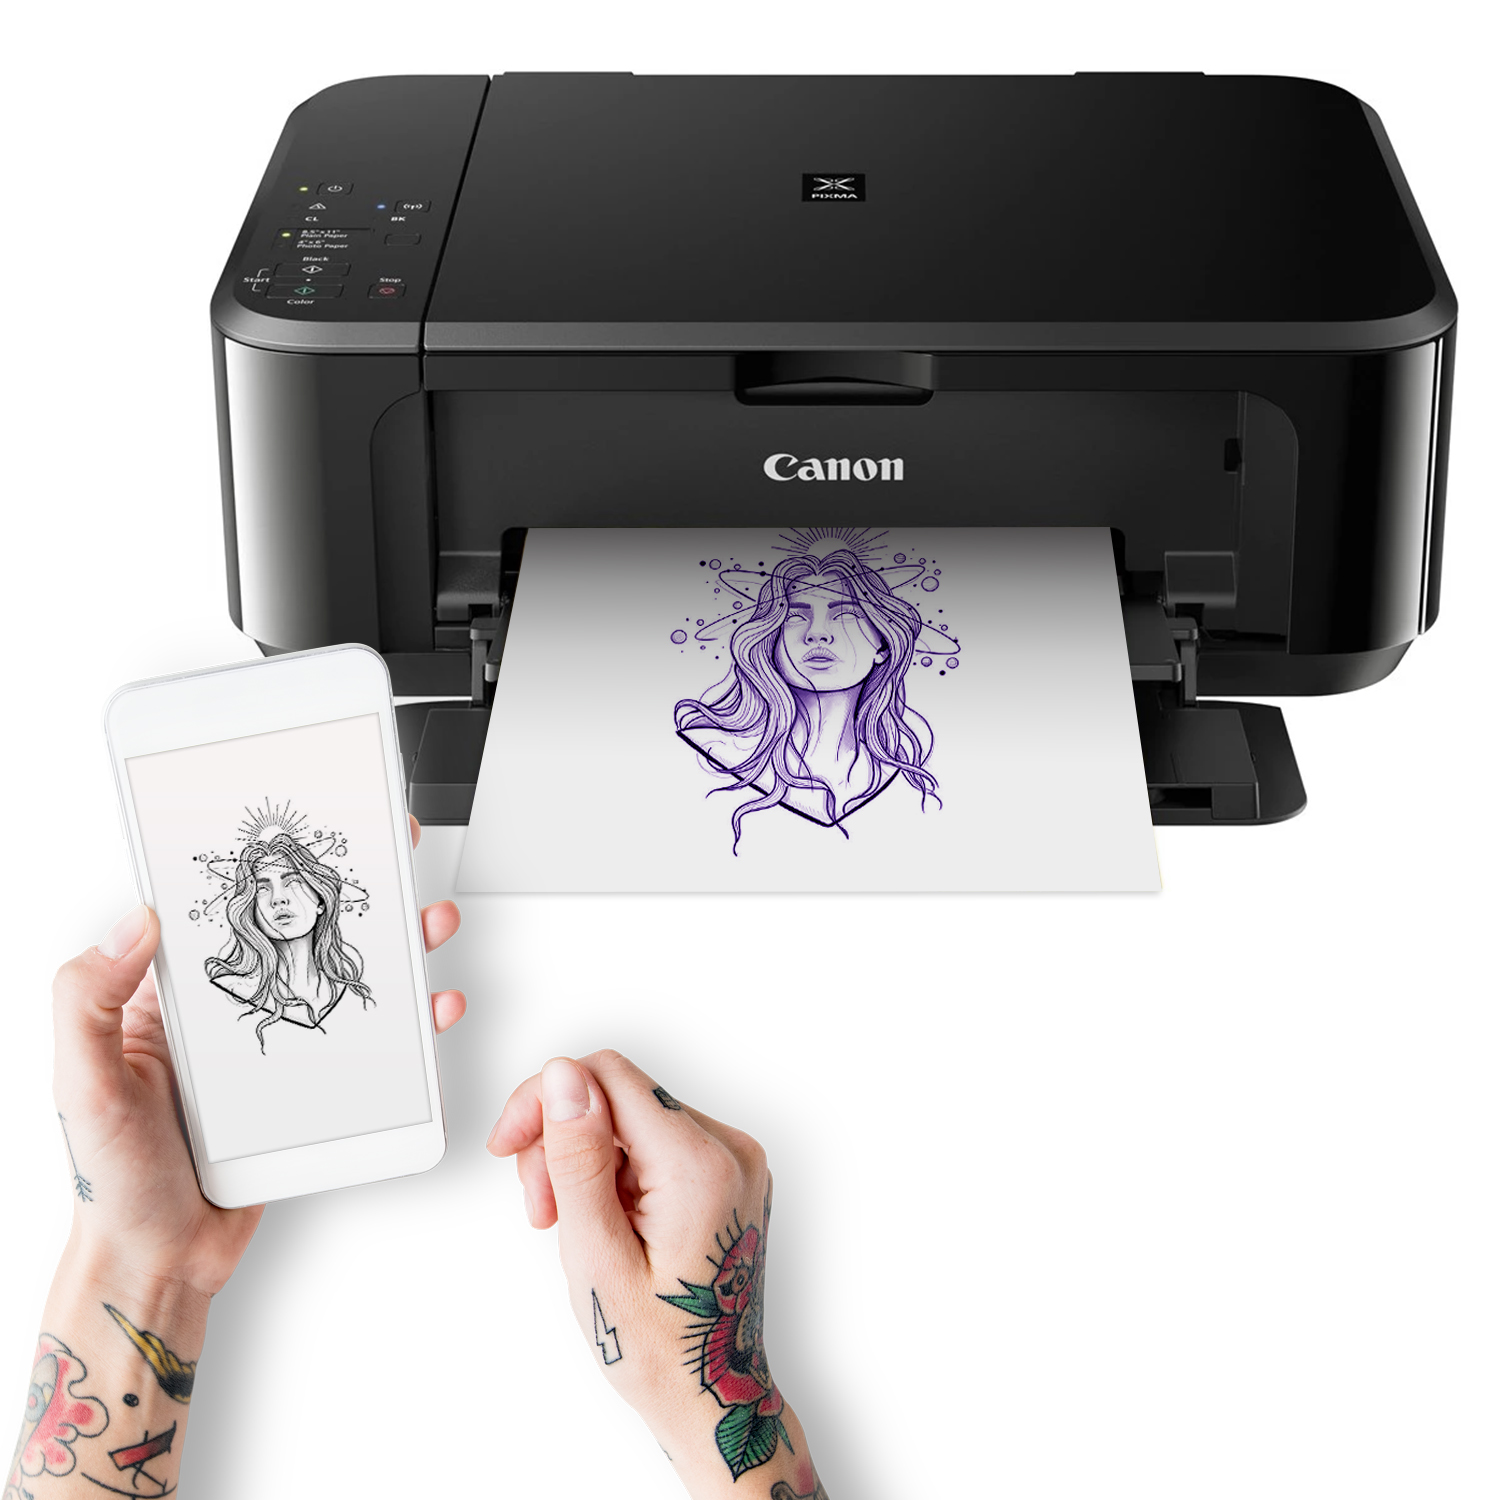 M08F Wireless Tattoo Transfer Stencil Printer — Phomemo